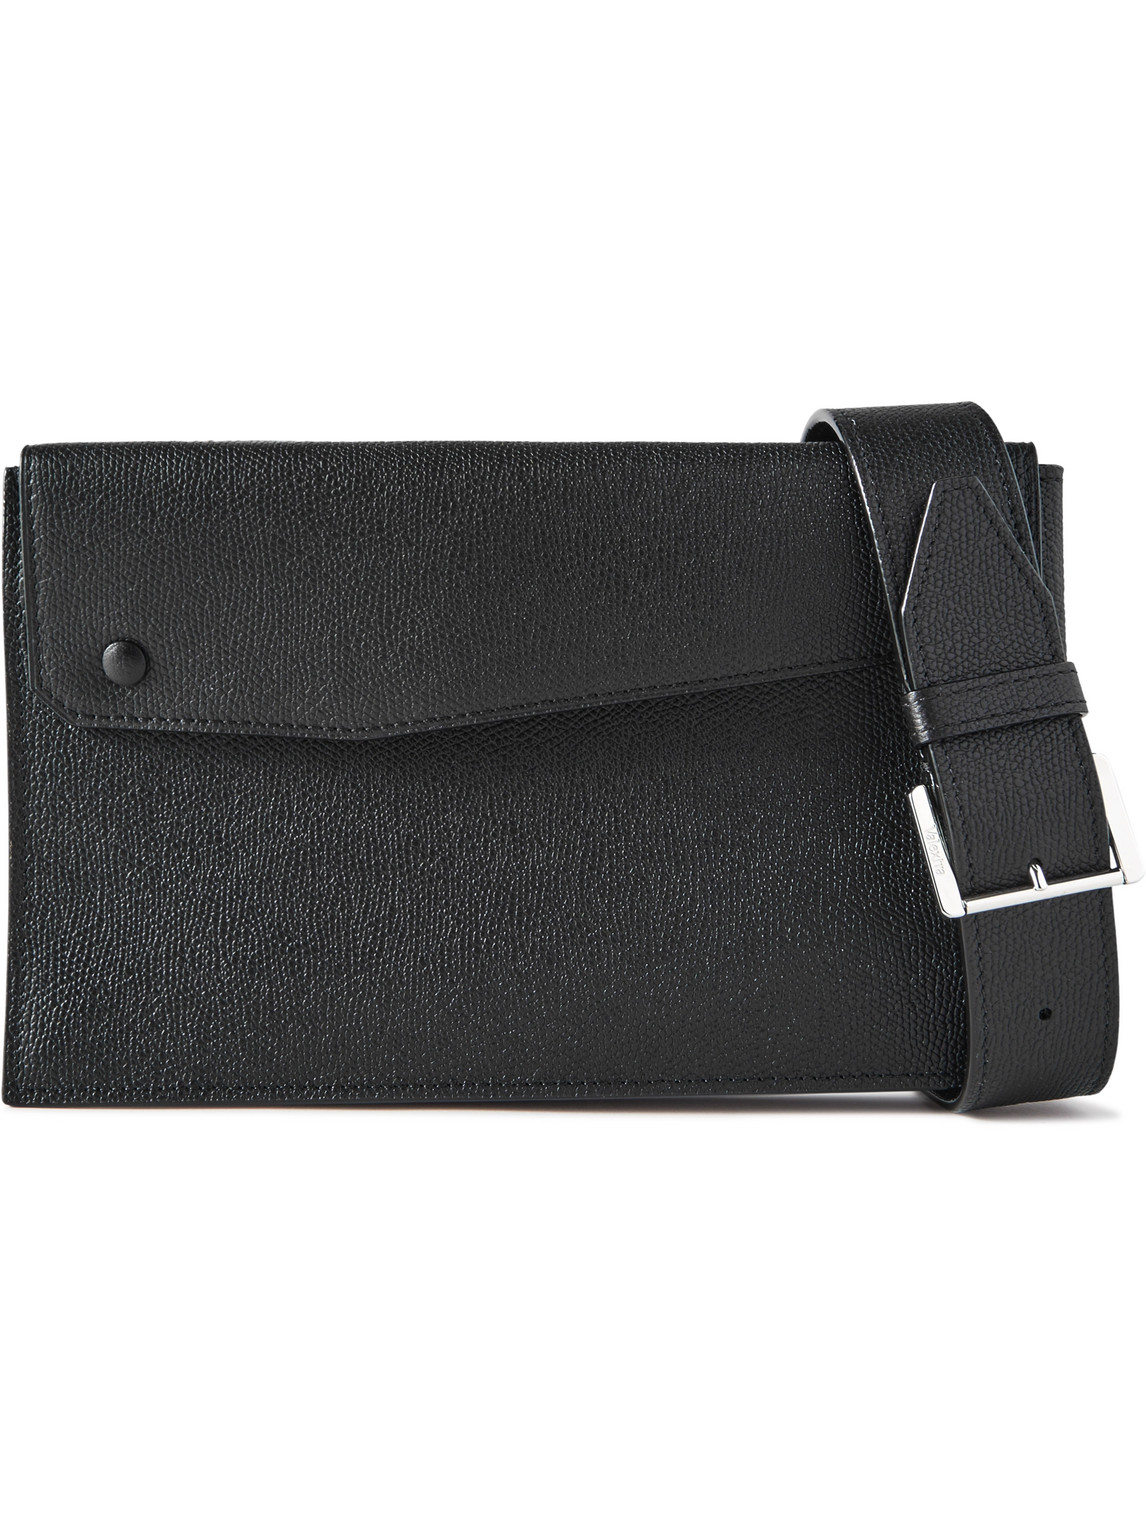 Valextra Pebble-grain Leather Messenger Bag In Black